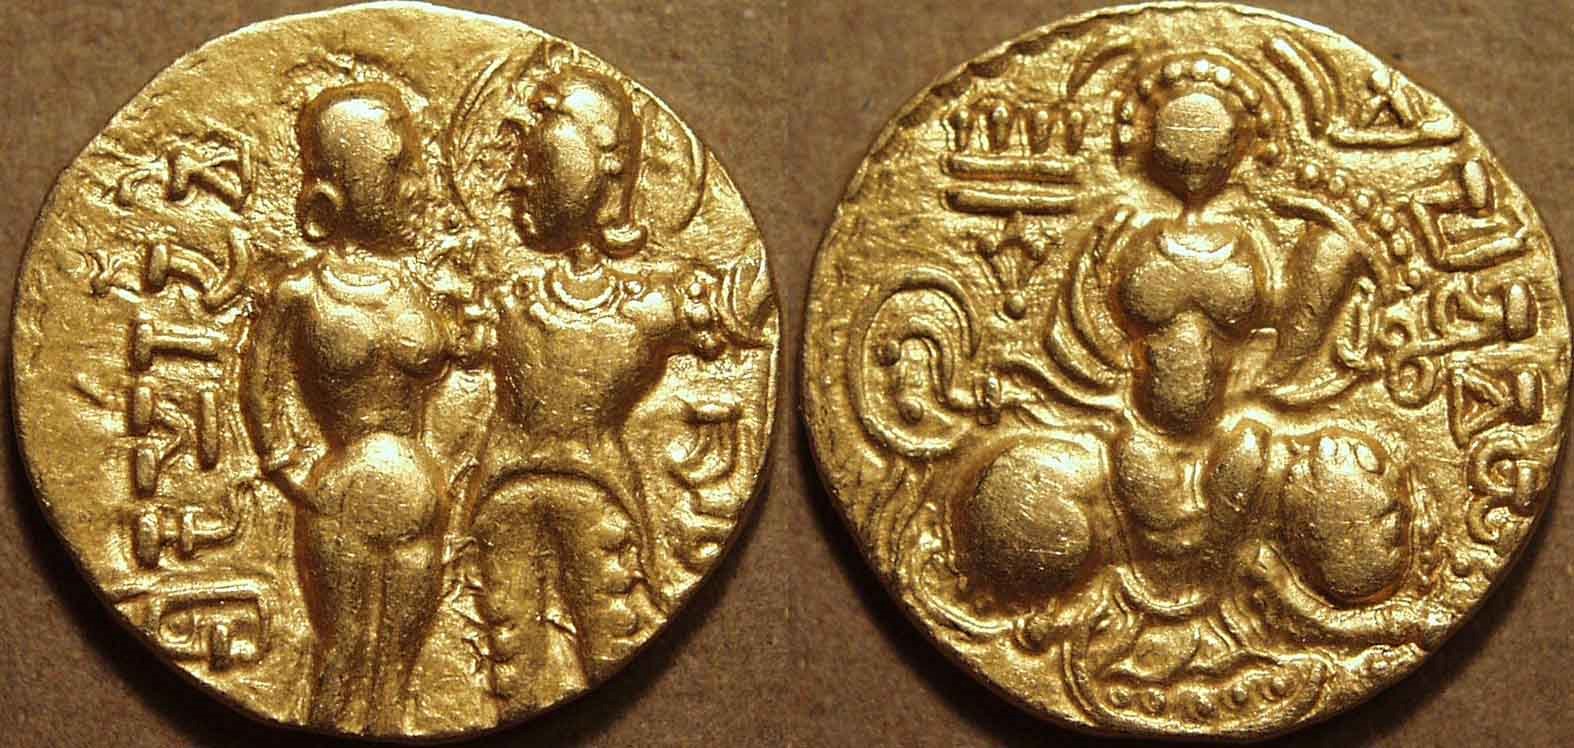 King & Queen Design Inspired Gold Dinar